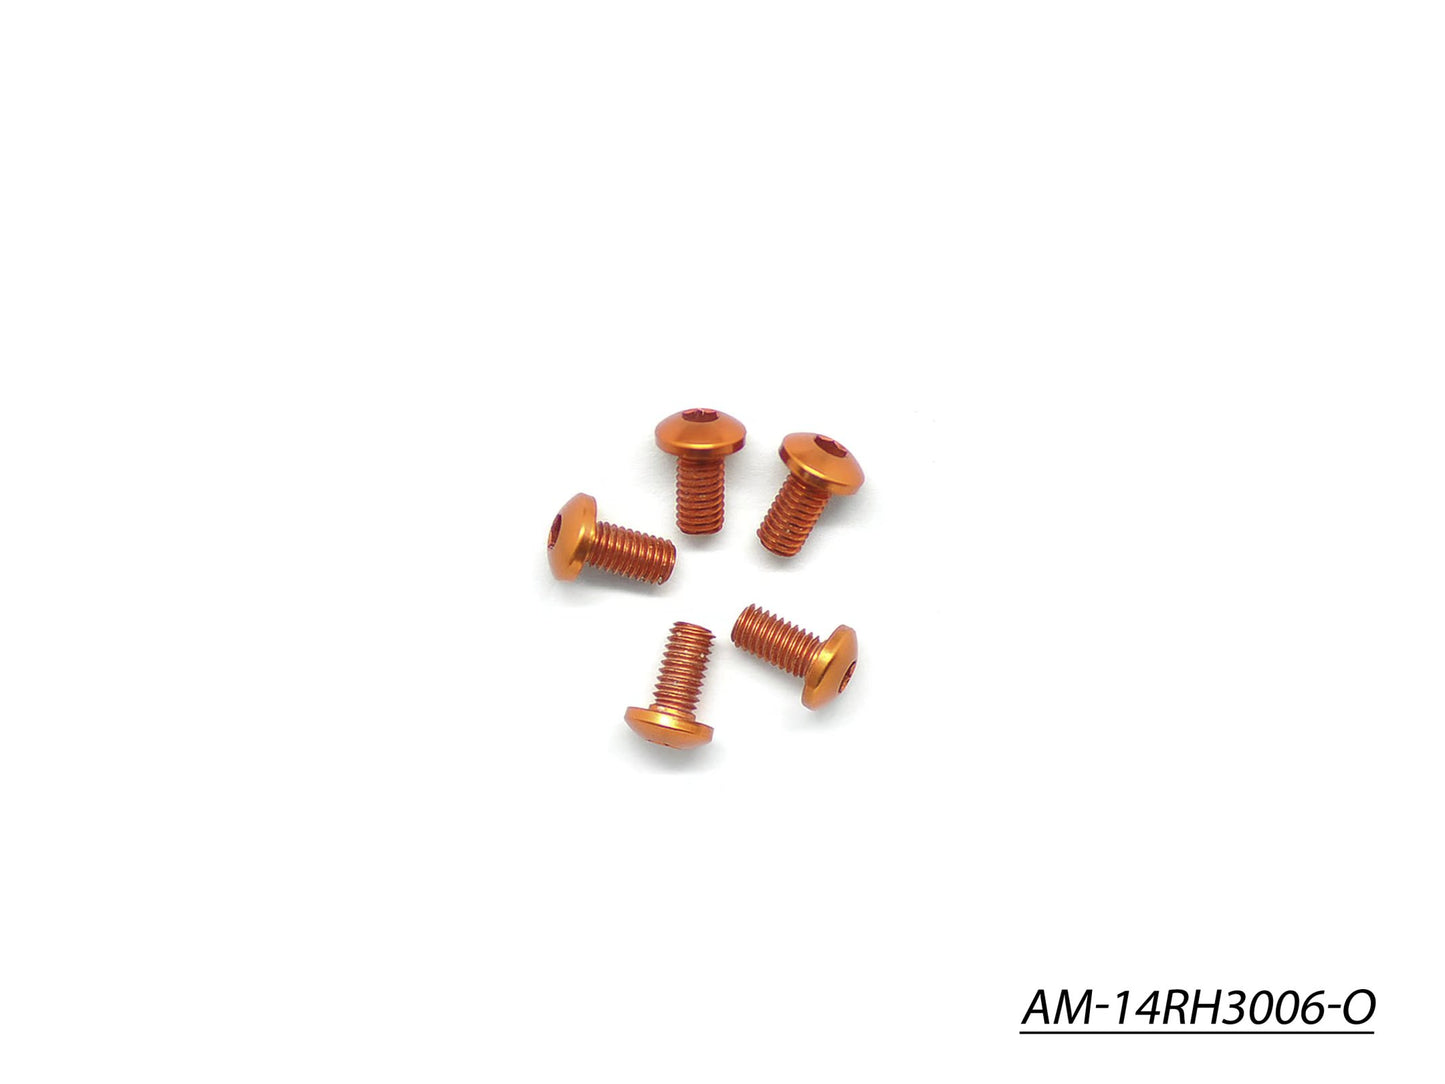 Alu Screw Allen Roundhead M3X6 Orange (7075) (5)  (AM-14RH3006-O)